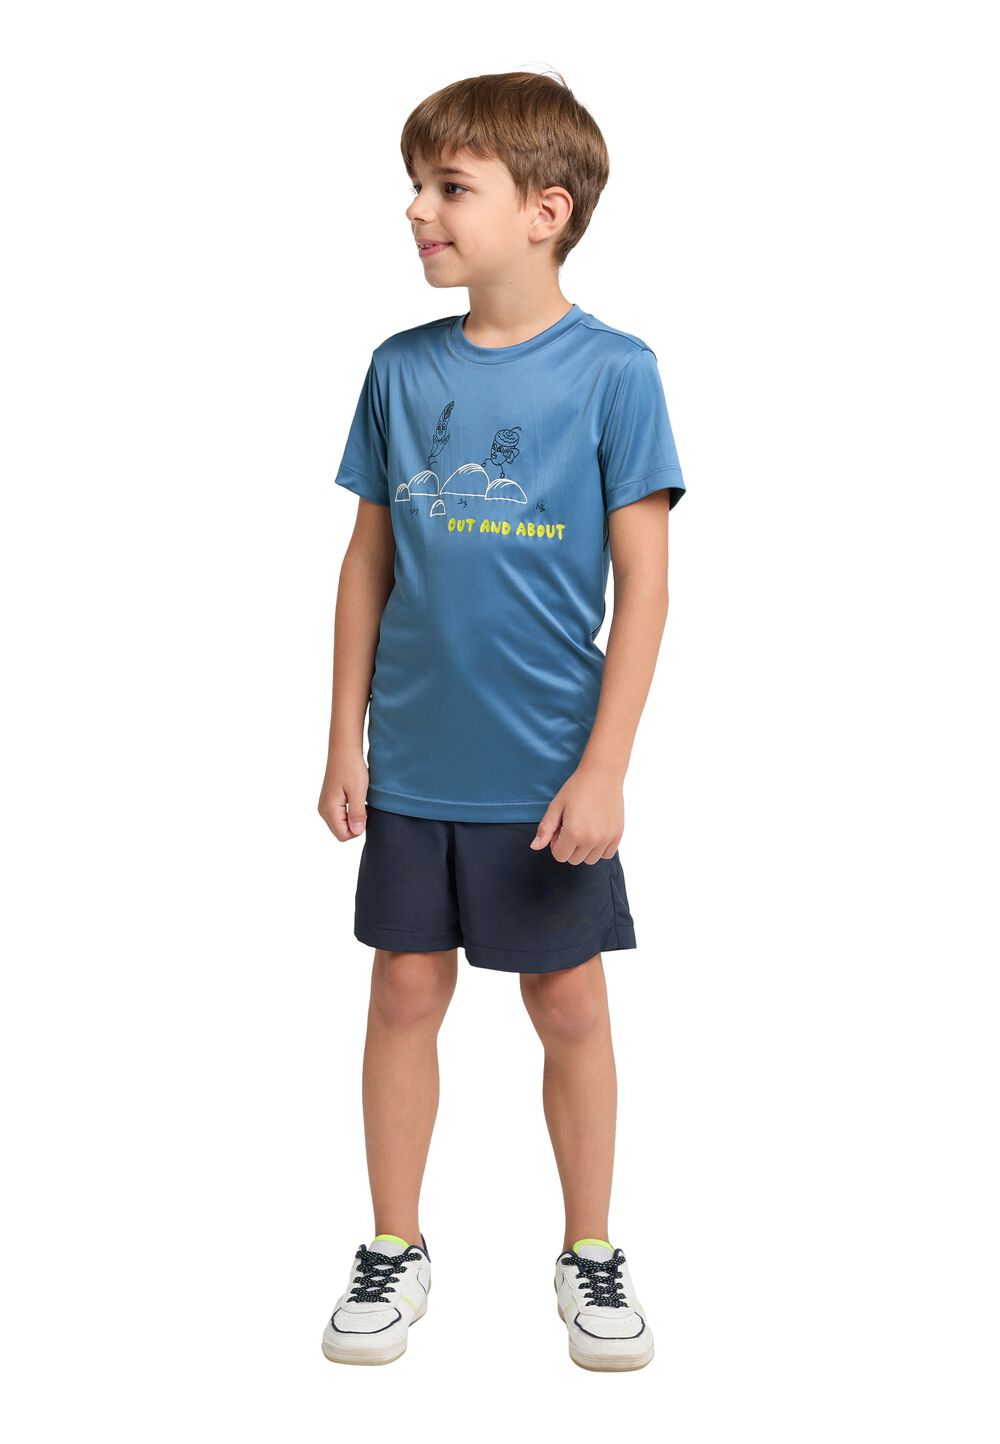 Jack Wolfskin OUT AND About T-Shirt Kids Functioneel shirt Kinderen 116 elemental blue elemental blue